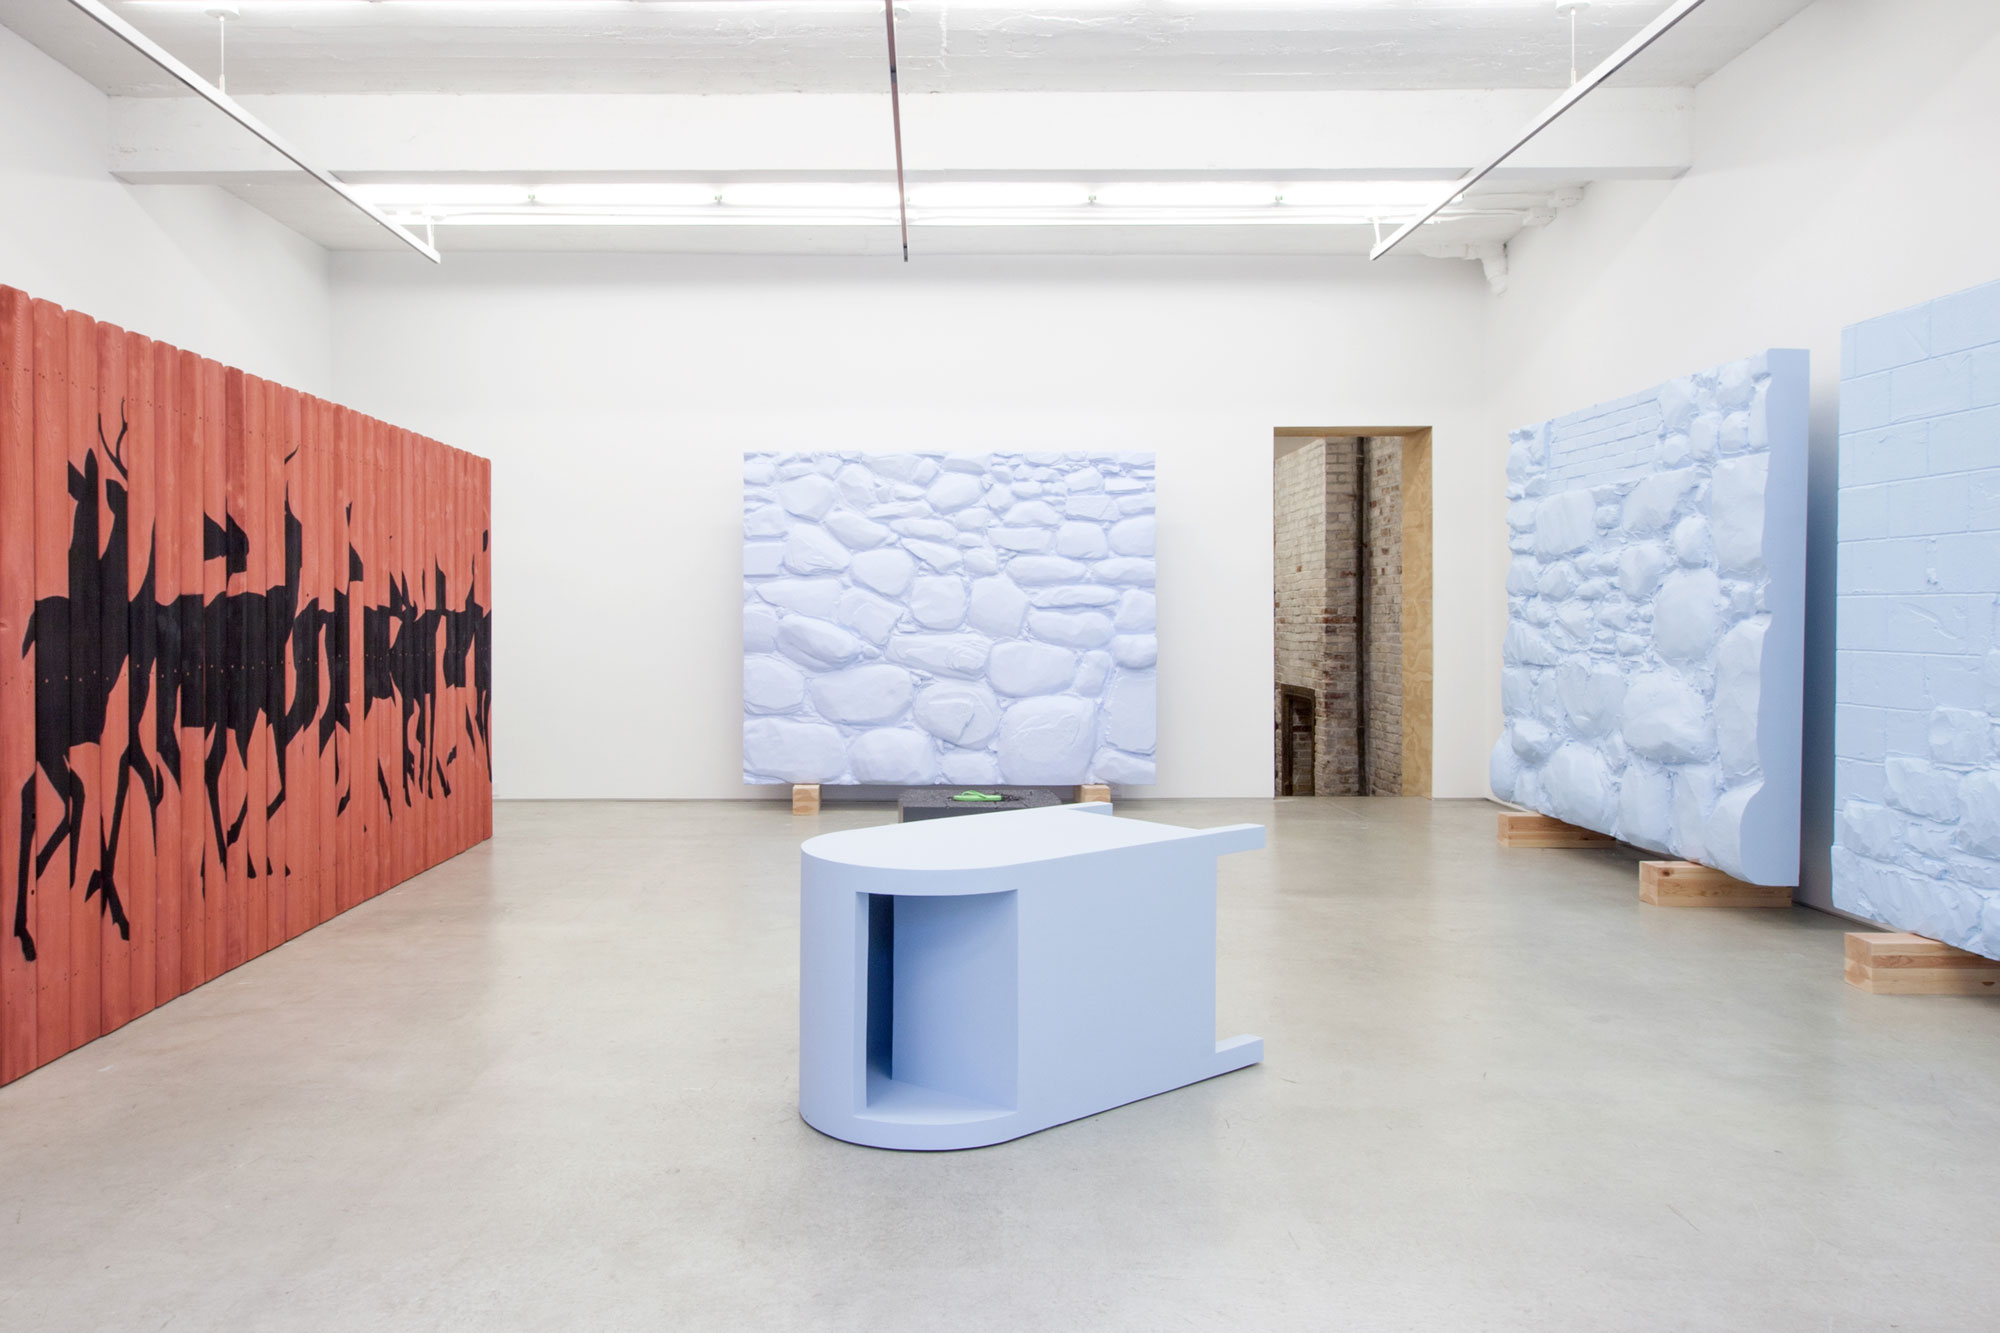 Installation view, Nathaniel Robinson: Discrete Pieces, Launch F18, New York, NY, 2016